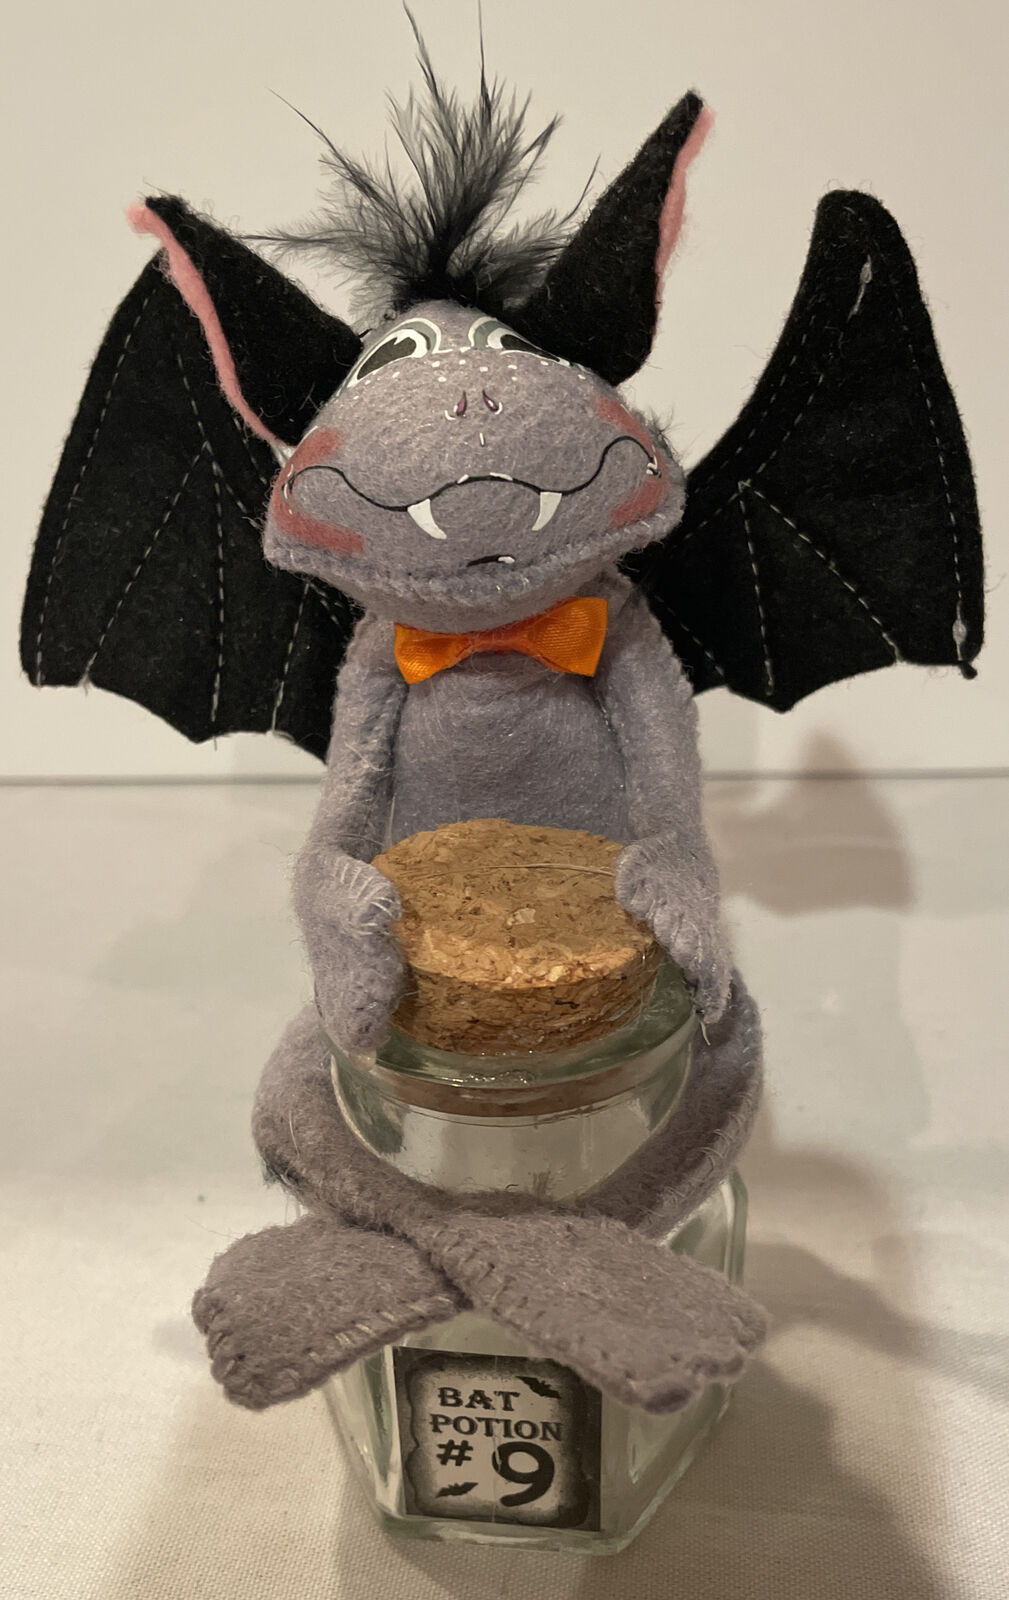 Annalee Halloween Bat Sitting On Bottle “bat Potion # 9 “ 2012 Figure